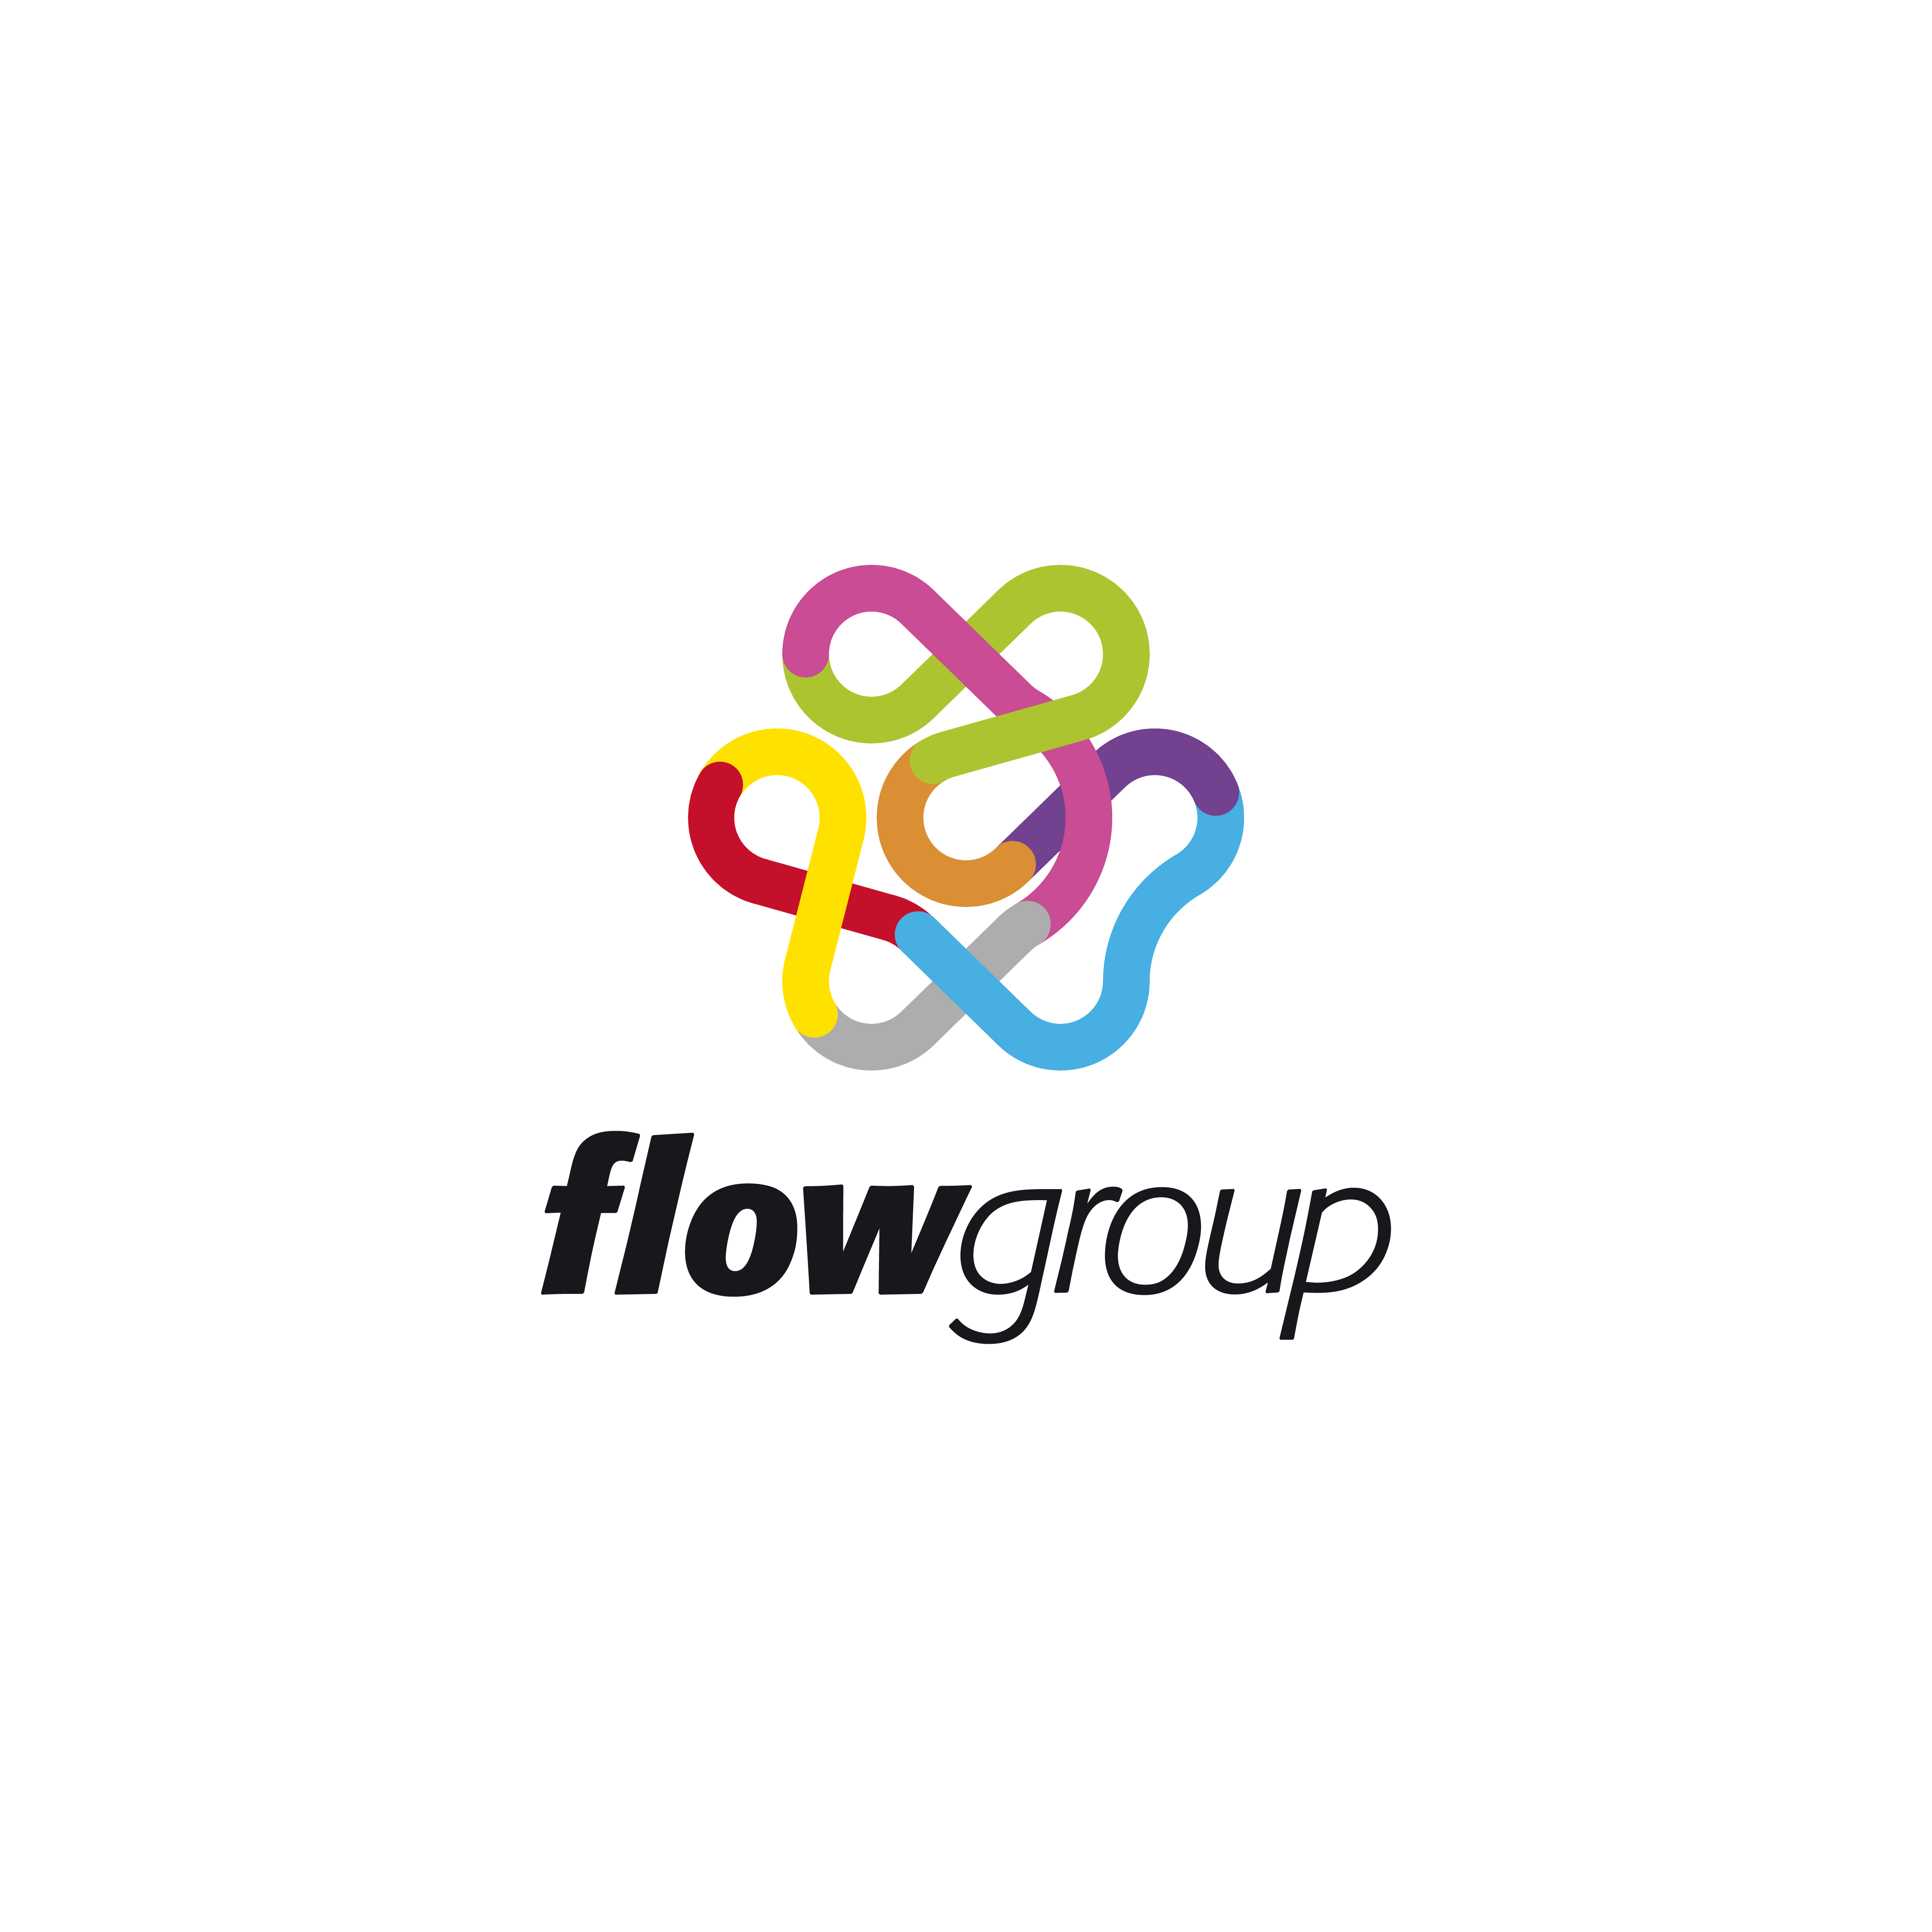 Flowgroup logotype for International Flowgroup in Spain